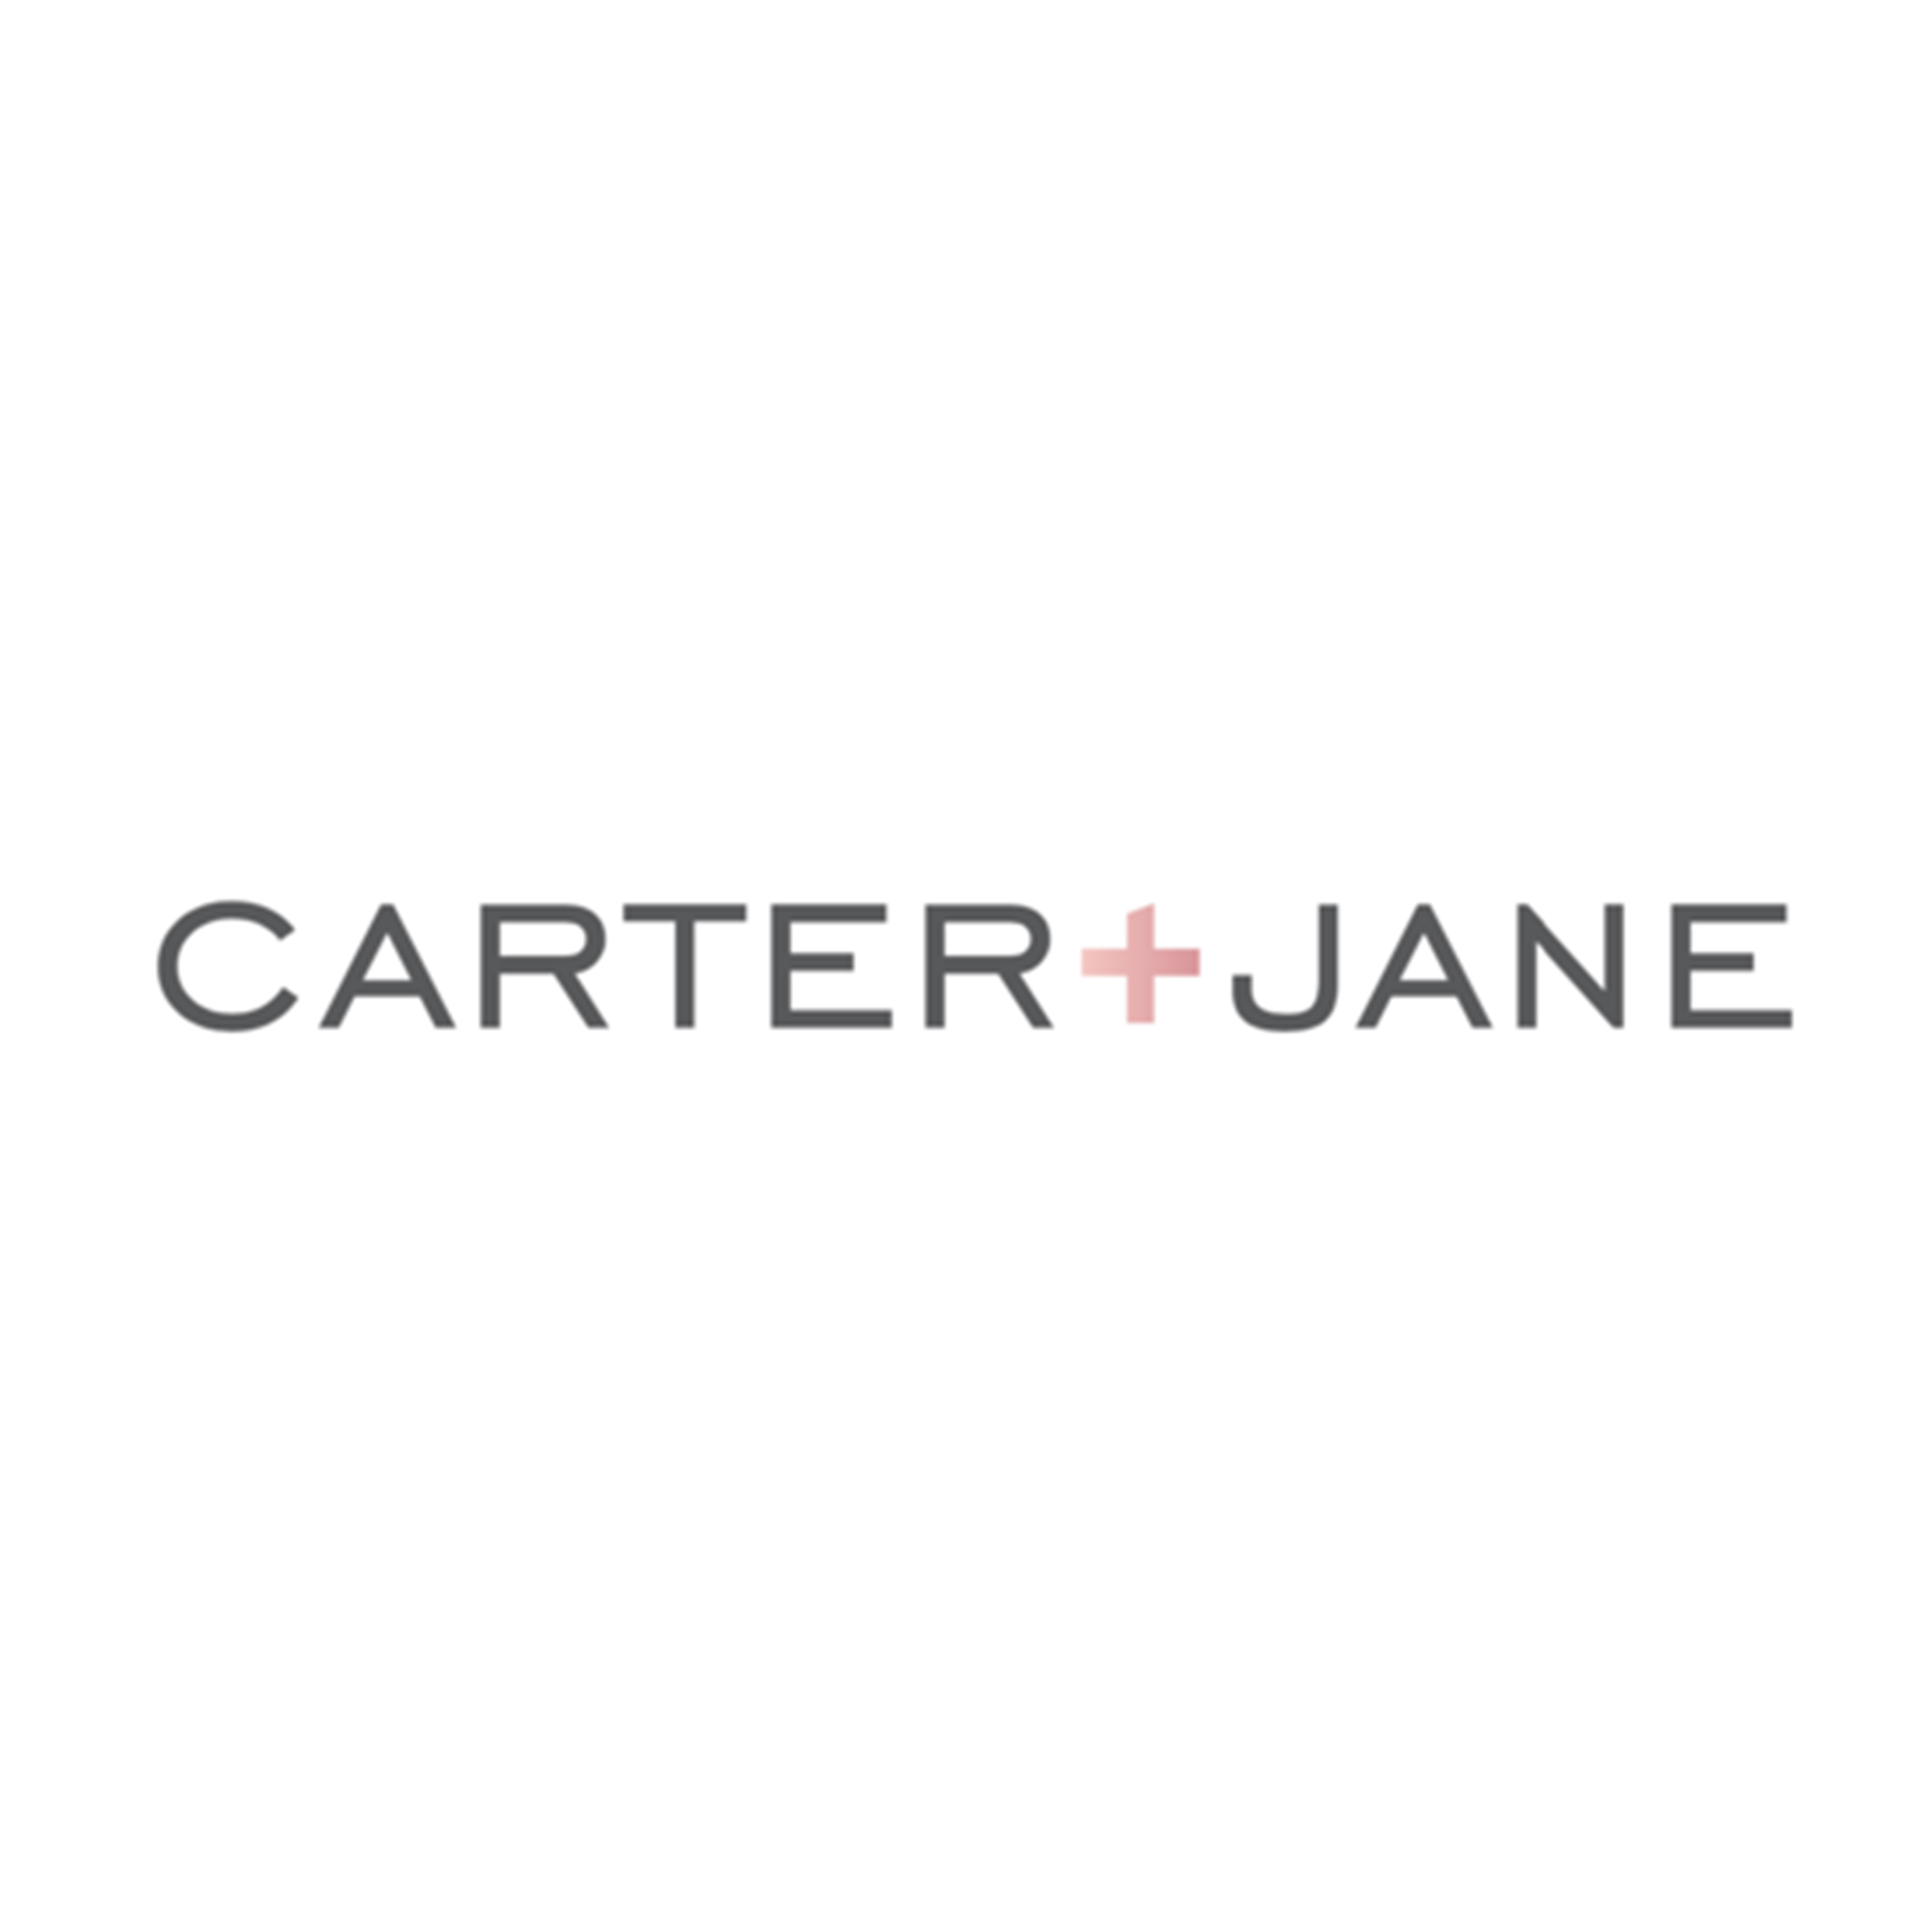 Carter + Jane